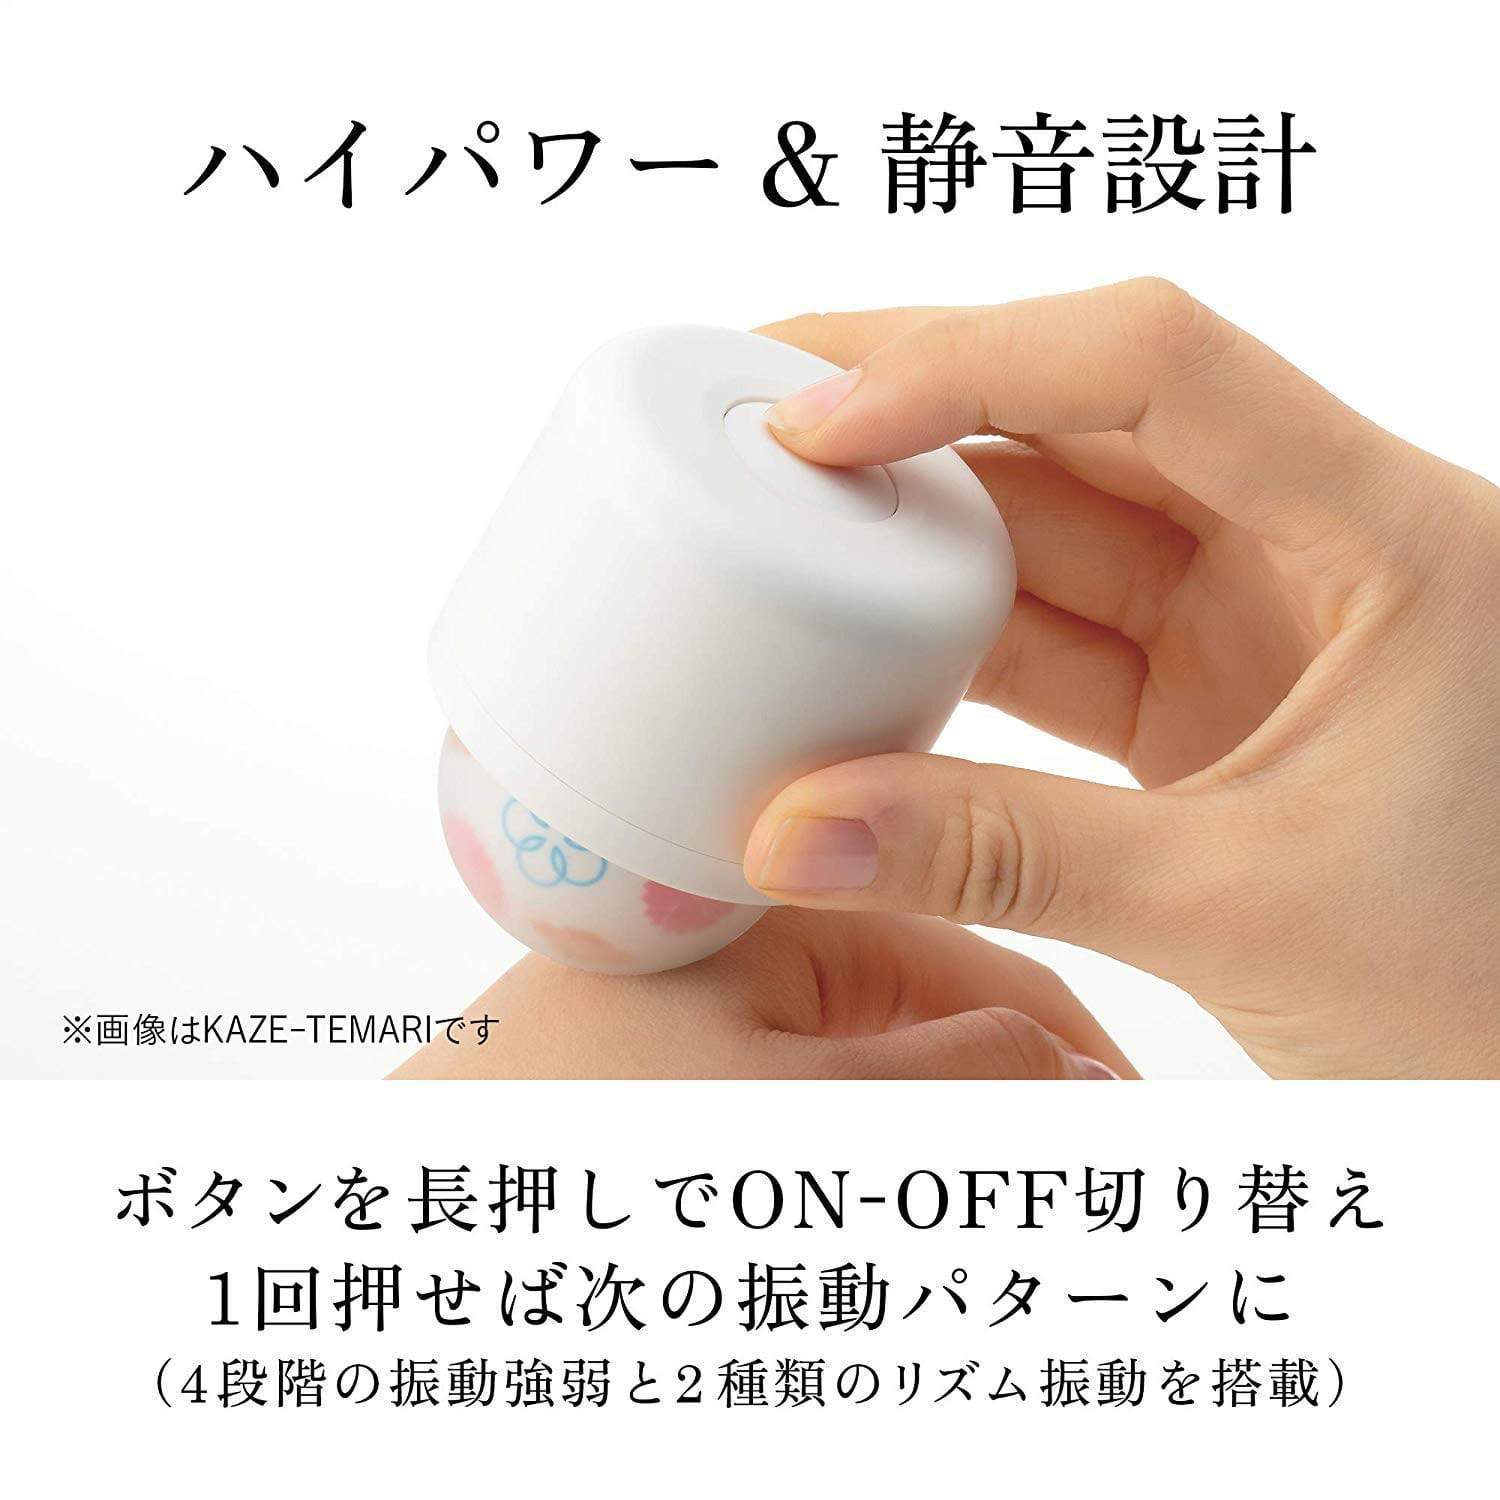 Tenga - Iroha Hana-Temari Clit Massager (White) -  Clit Massager (Vibration) Rechargeable  Durio.sg